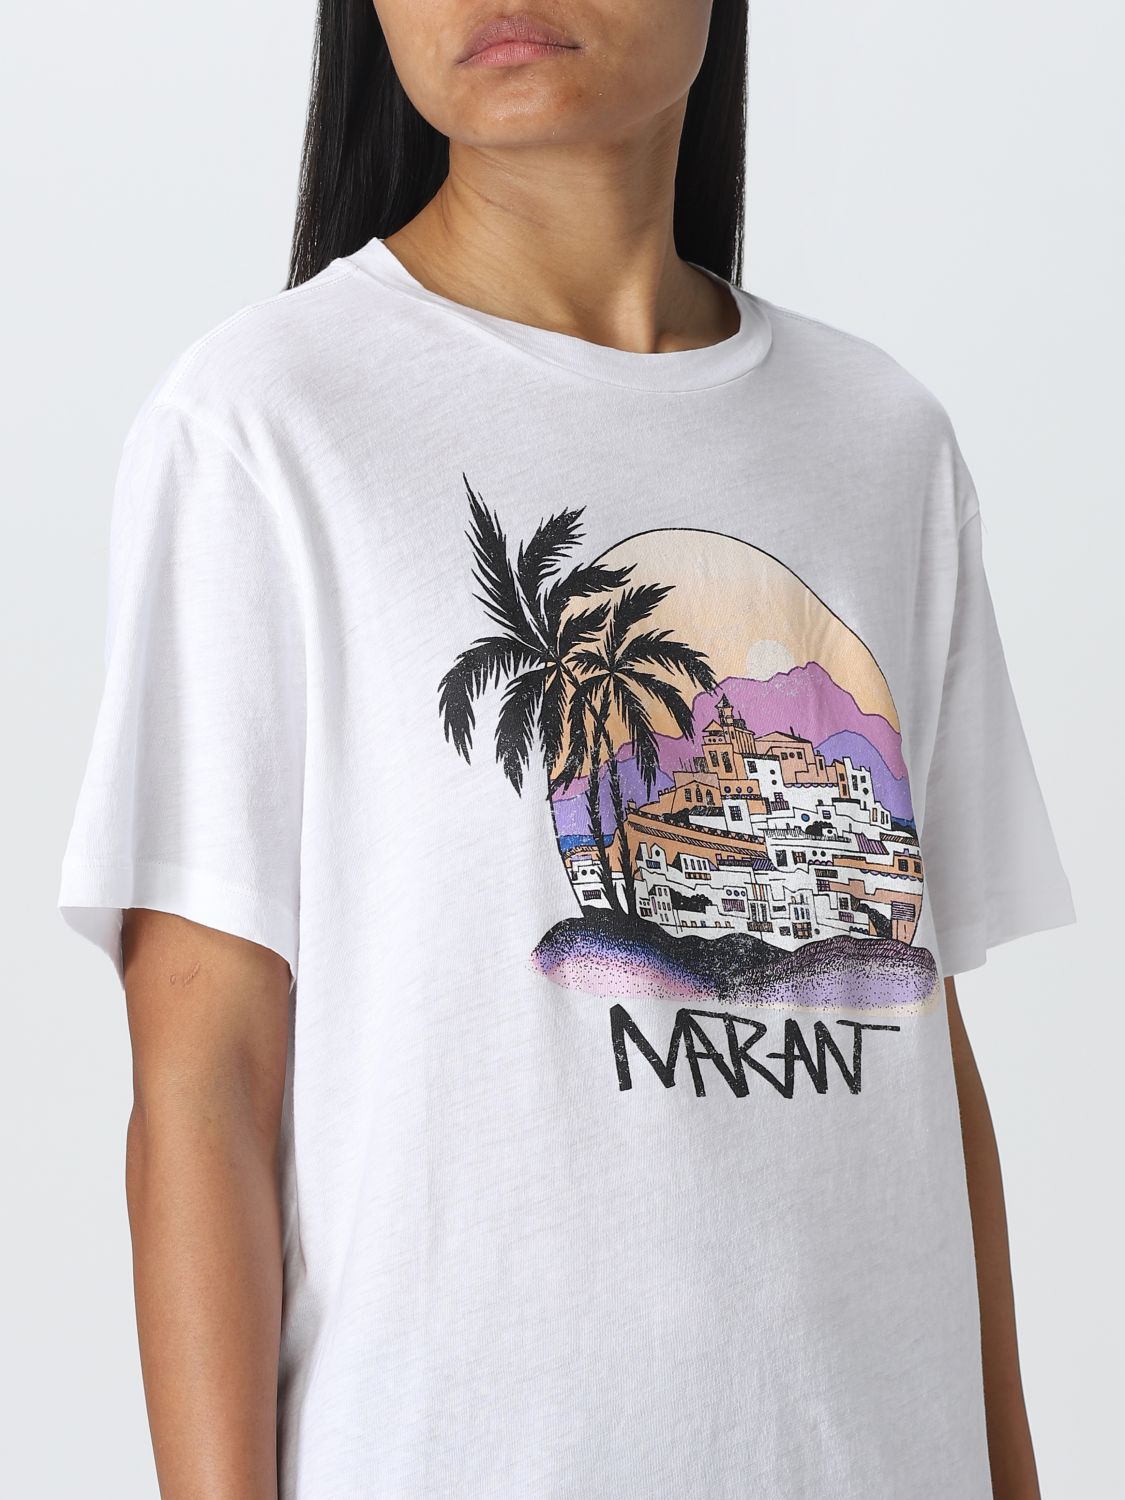 ISABEL MARANT ETOILE: t-shirt for woman White | Isabel Marant t- shirt TS0001FAA1N90E online on GIGLIO.COM